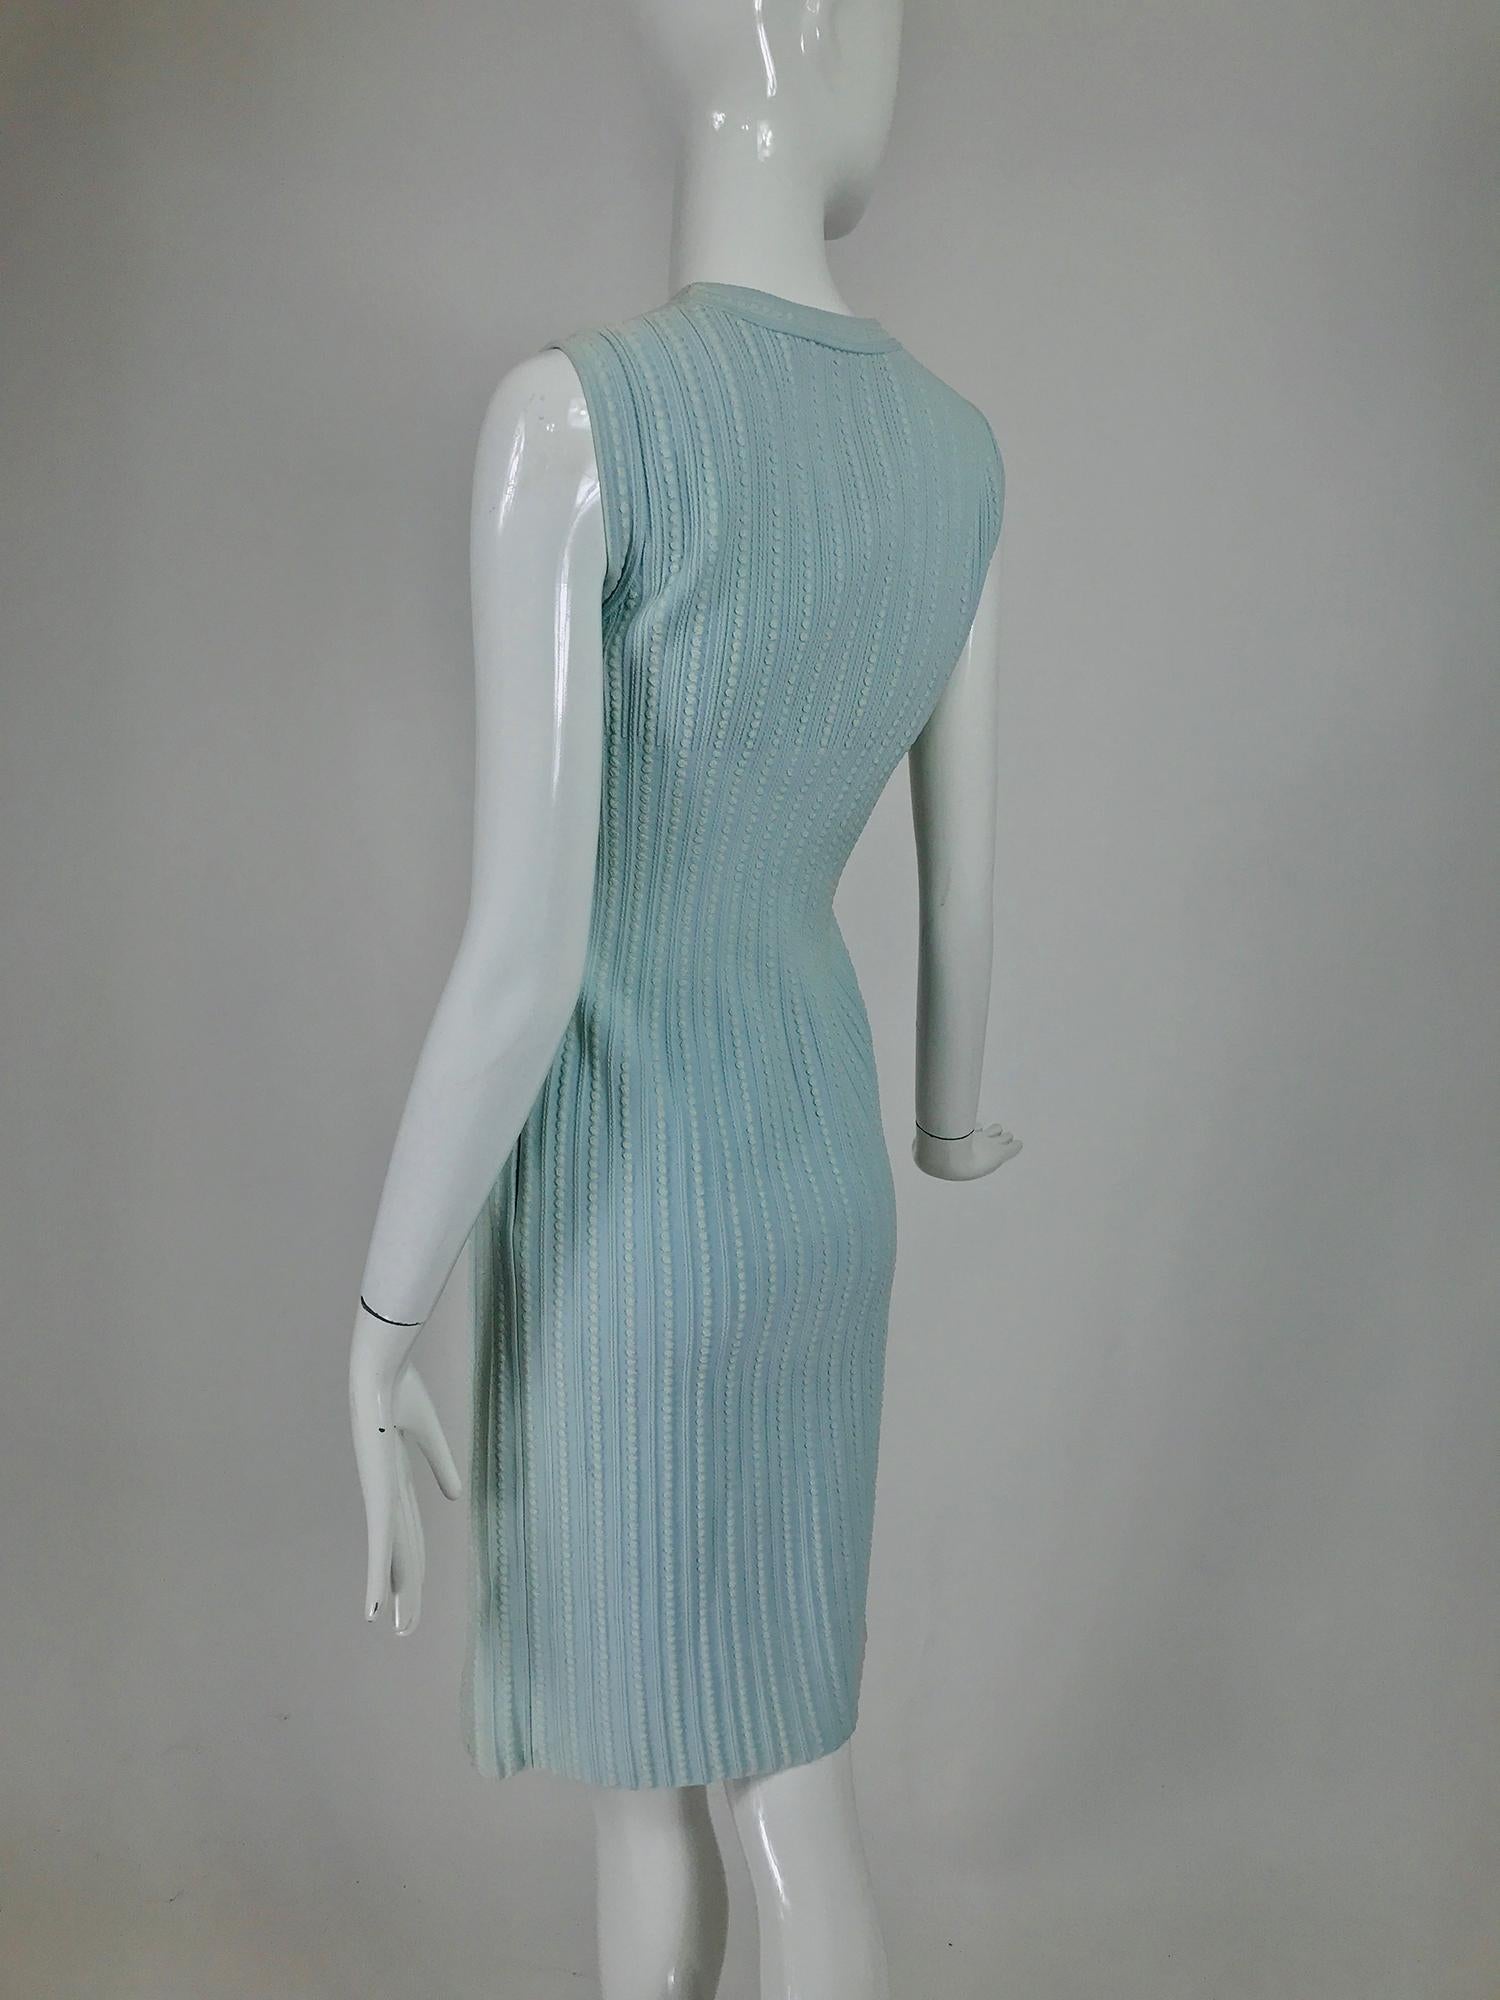  Azzedine Alaïa Blue and Cream Fitted Body Con Dress 1